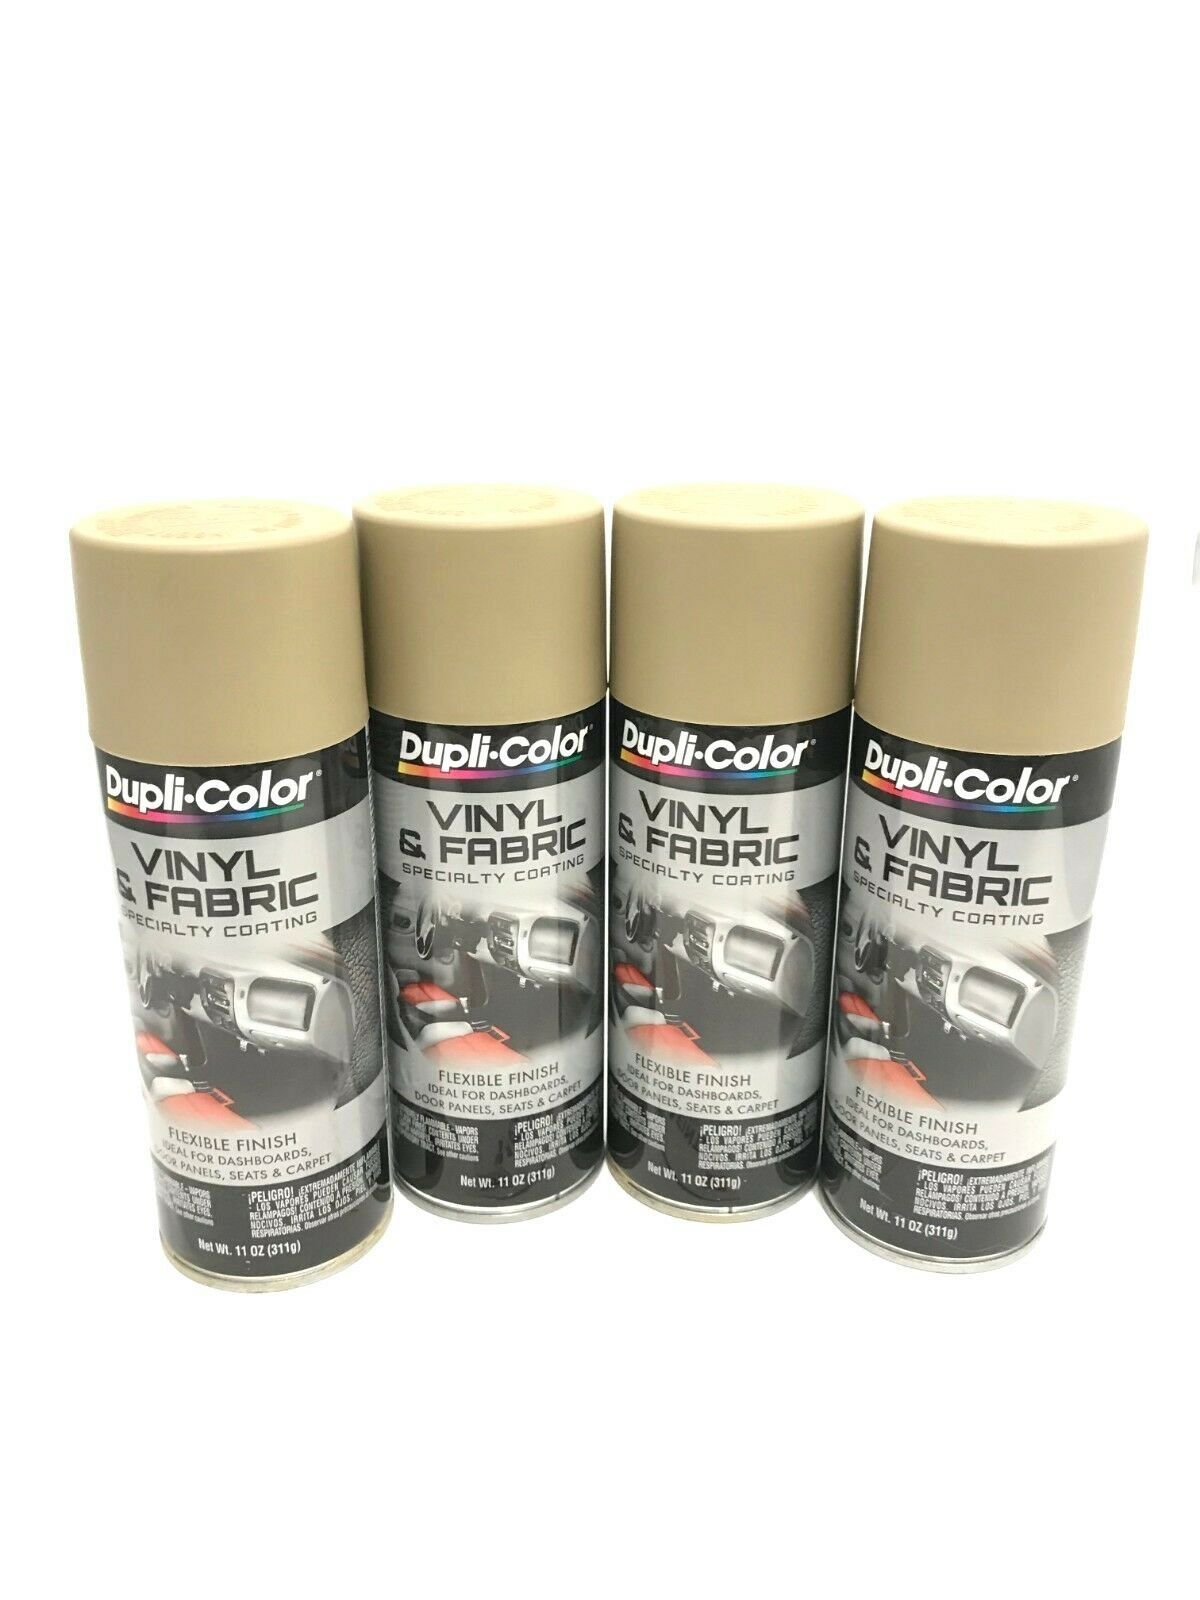 Duplicolor Hvp105 - 6 Pack Vinyl & Fabric Spray Paint White - 11 oz